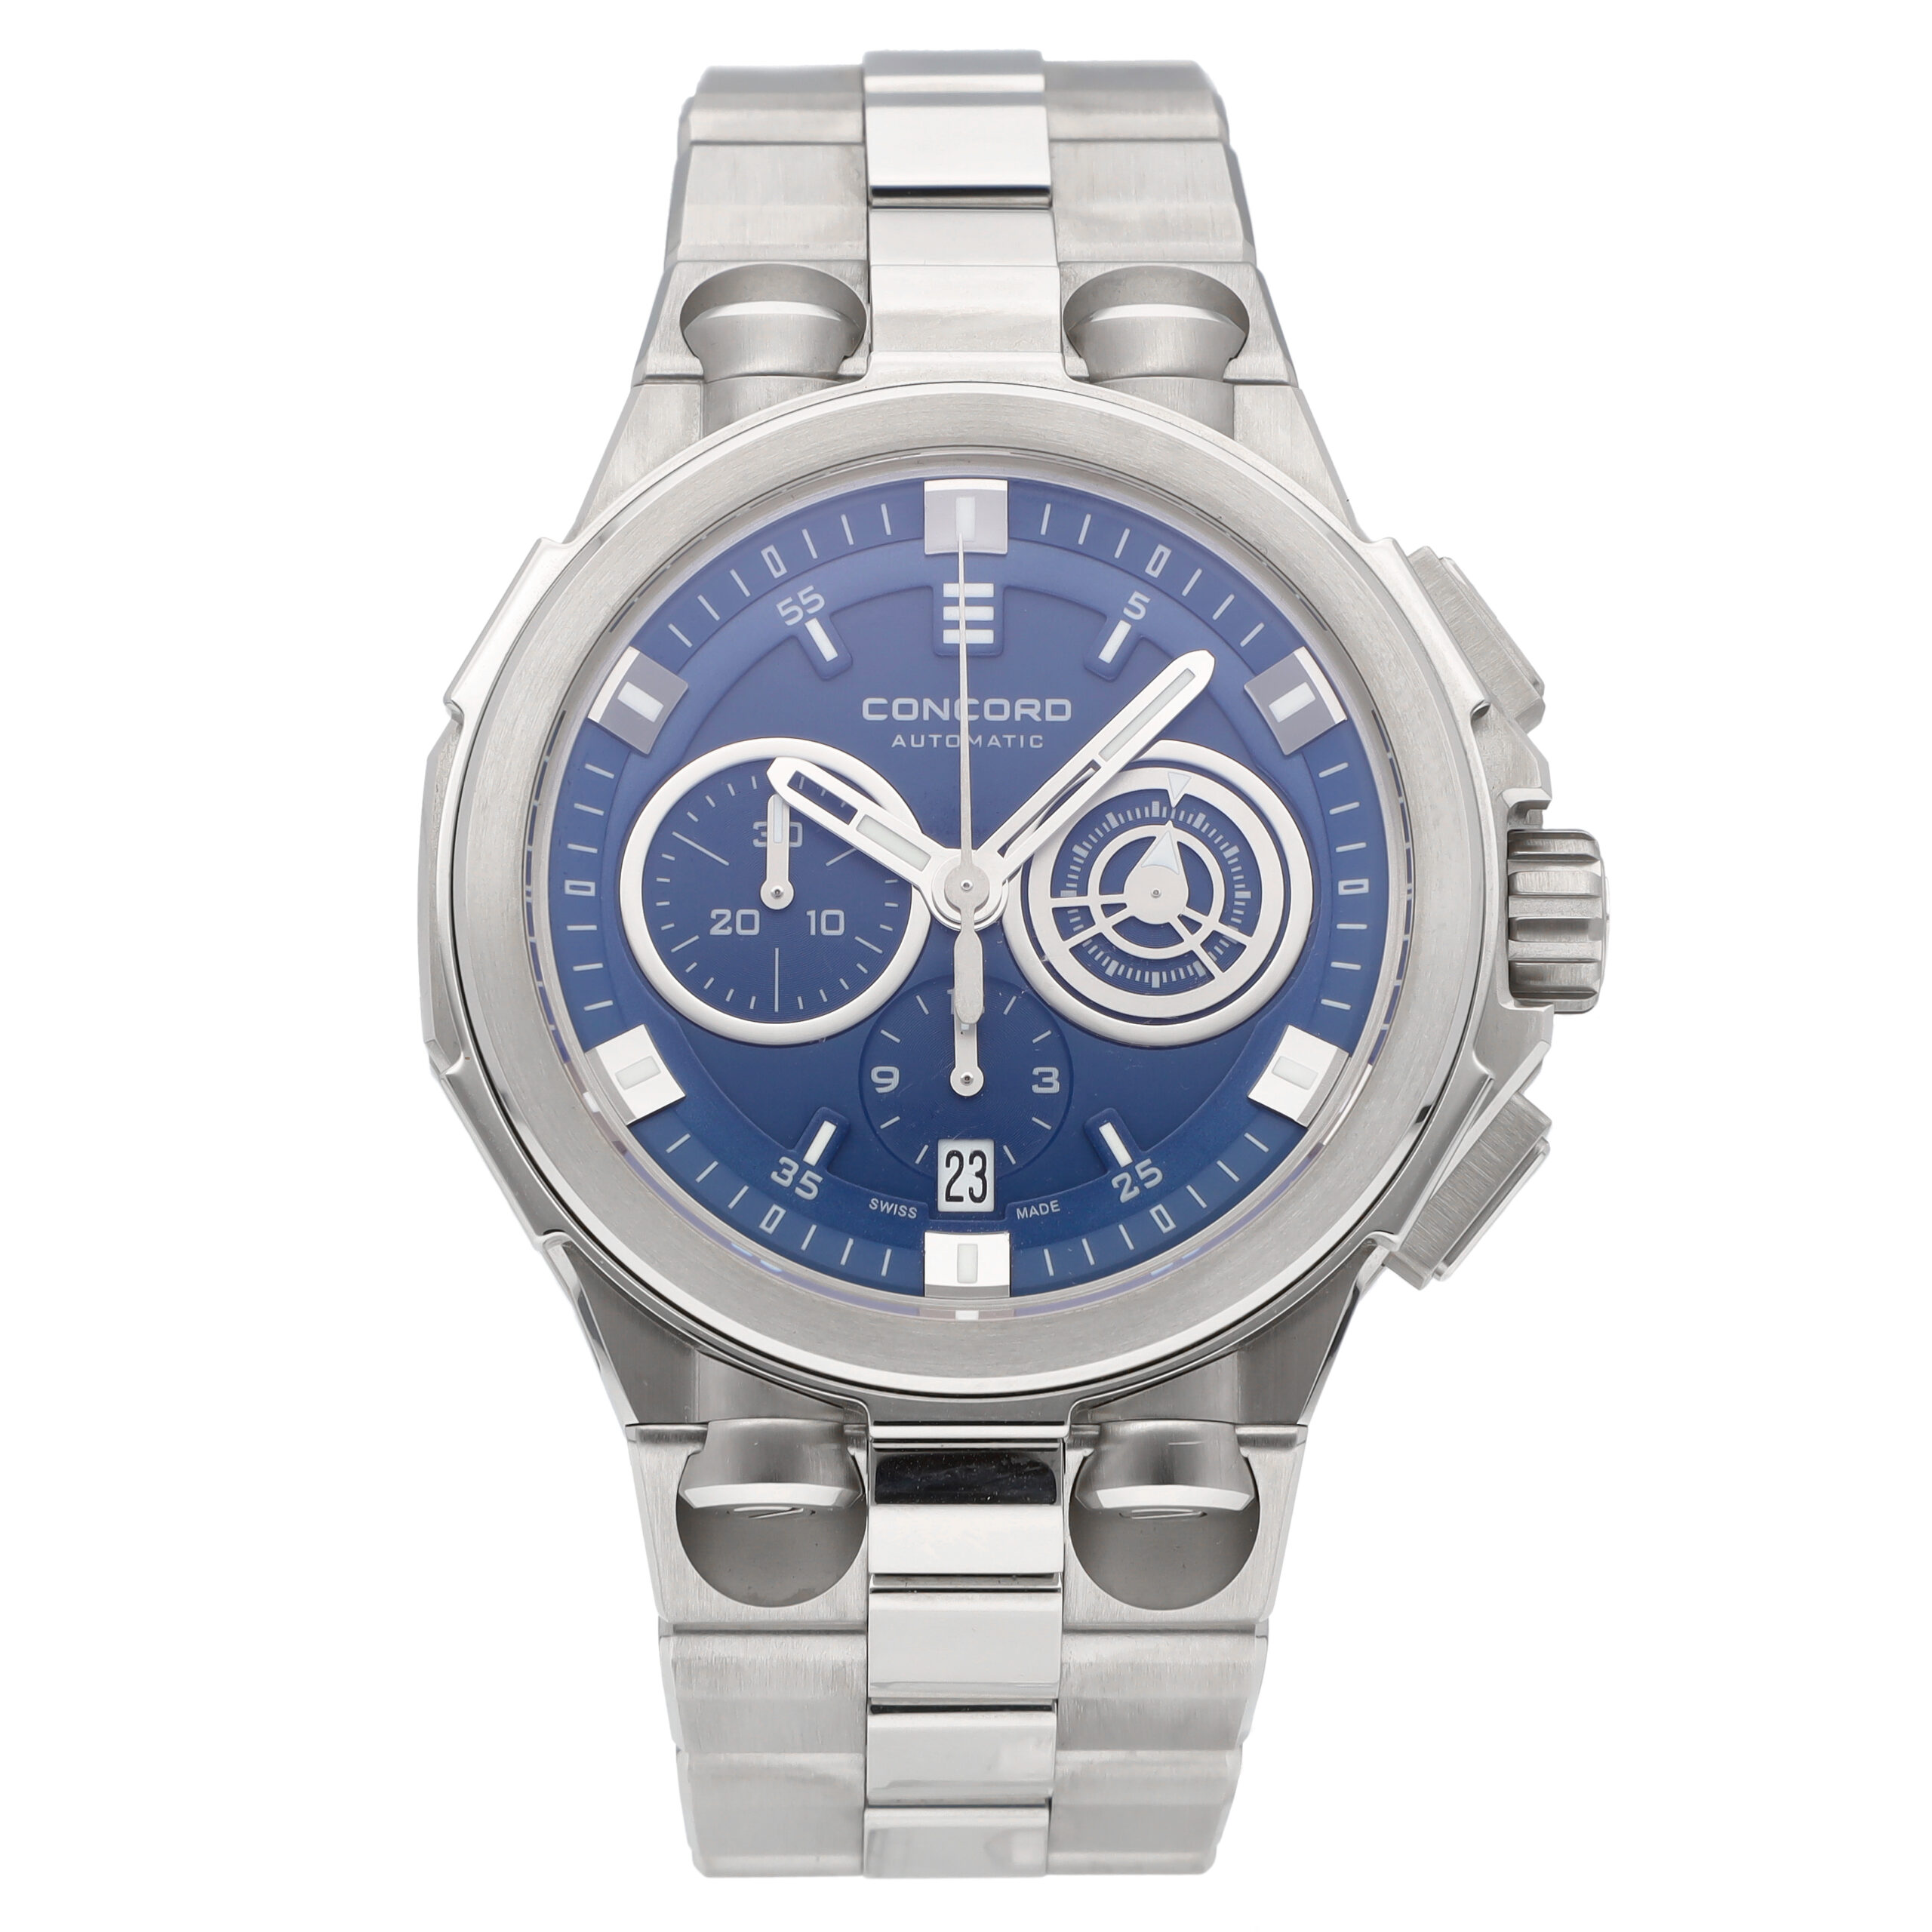 Mens S/Steel CONCORD AVANT-GARDE Chronograph Automatic Watch 01.5.14.1001*  MINT - Fashion Ace, Inc